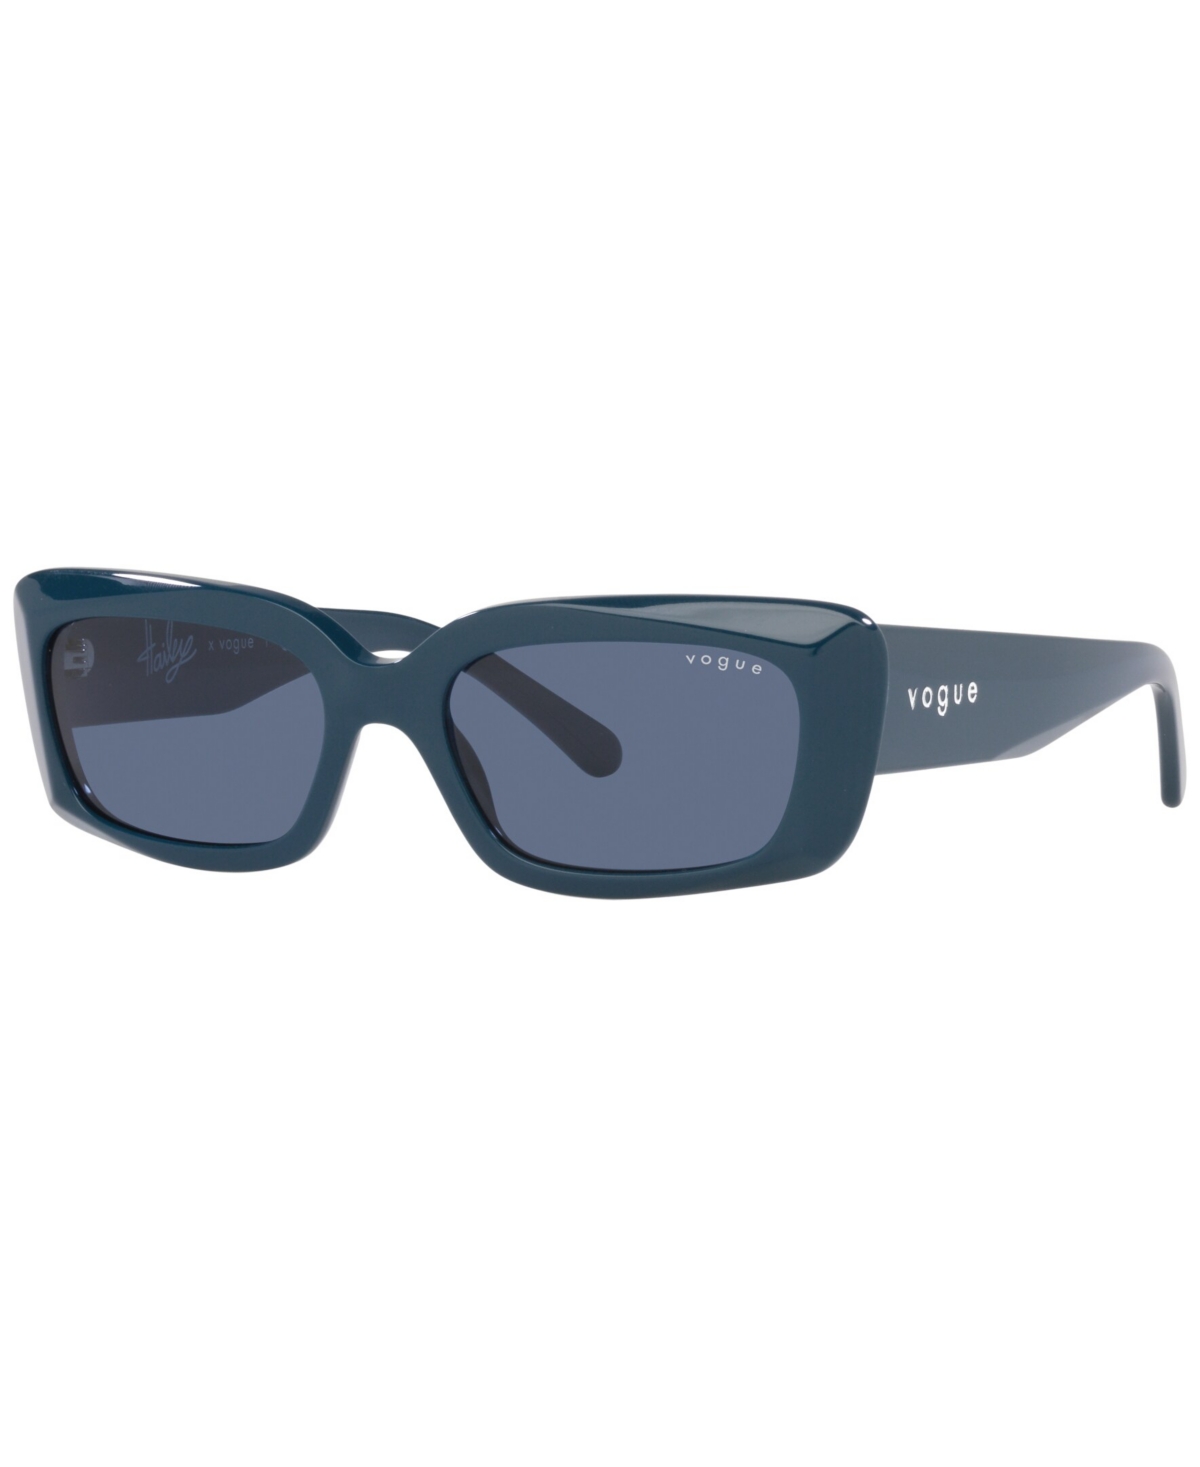 Hailey Bieber x Vogue Eyewear Women's Sunglasses, VO5440S - Blue